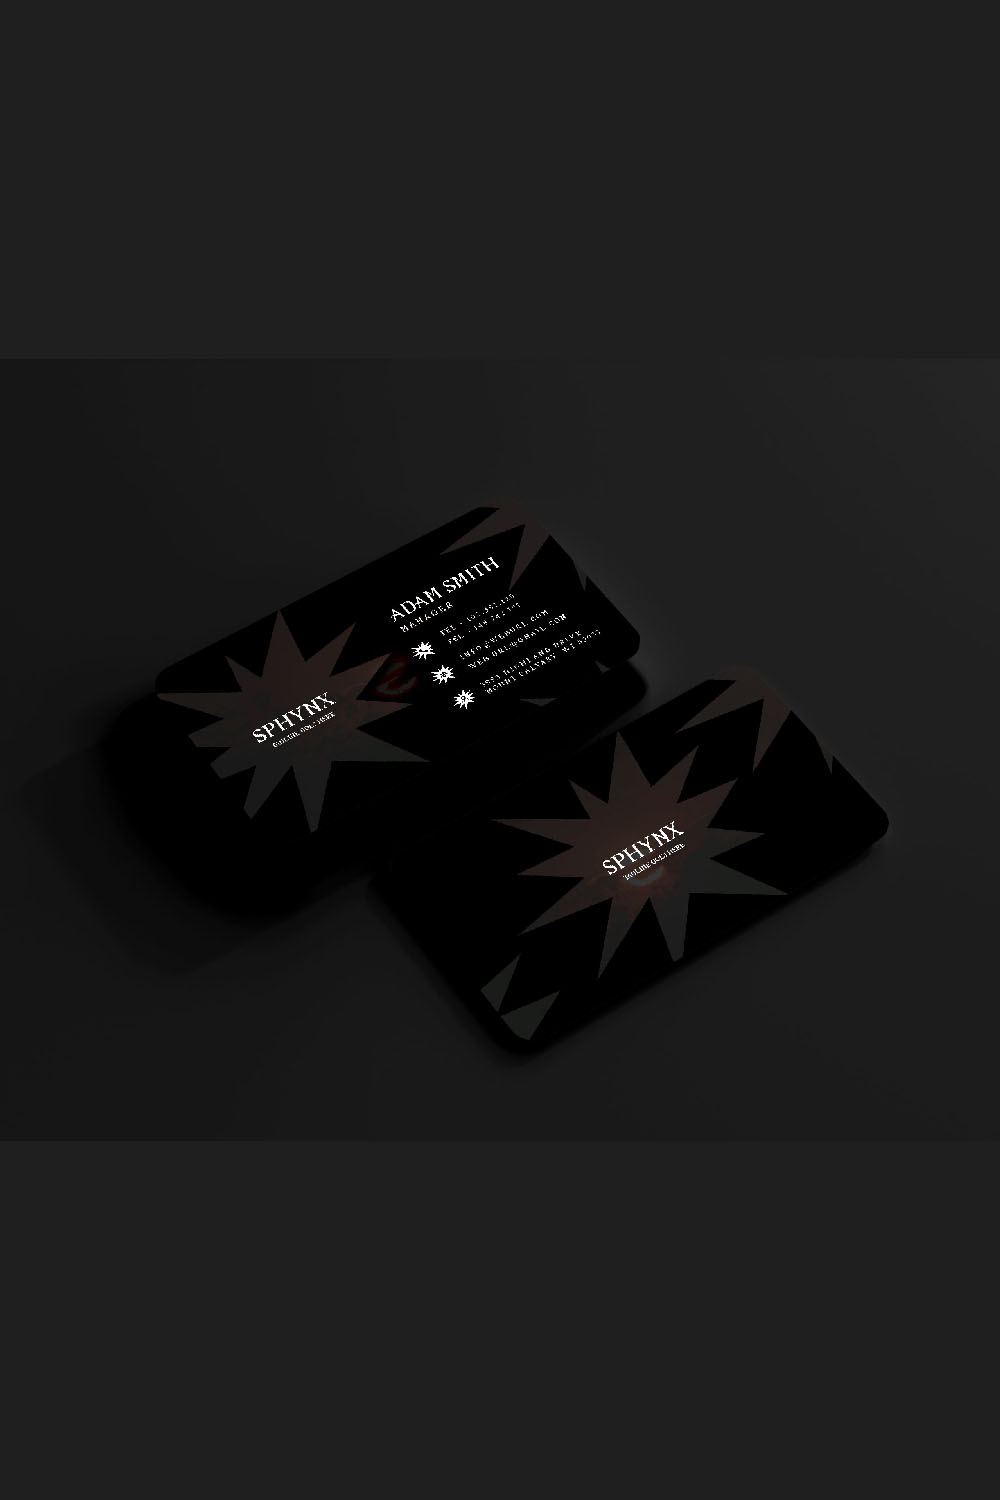 Creative and Unique Black Business Card Design pinterest image.